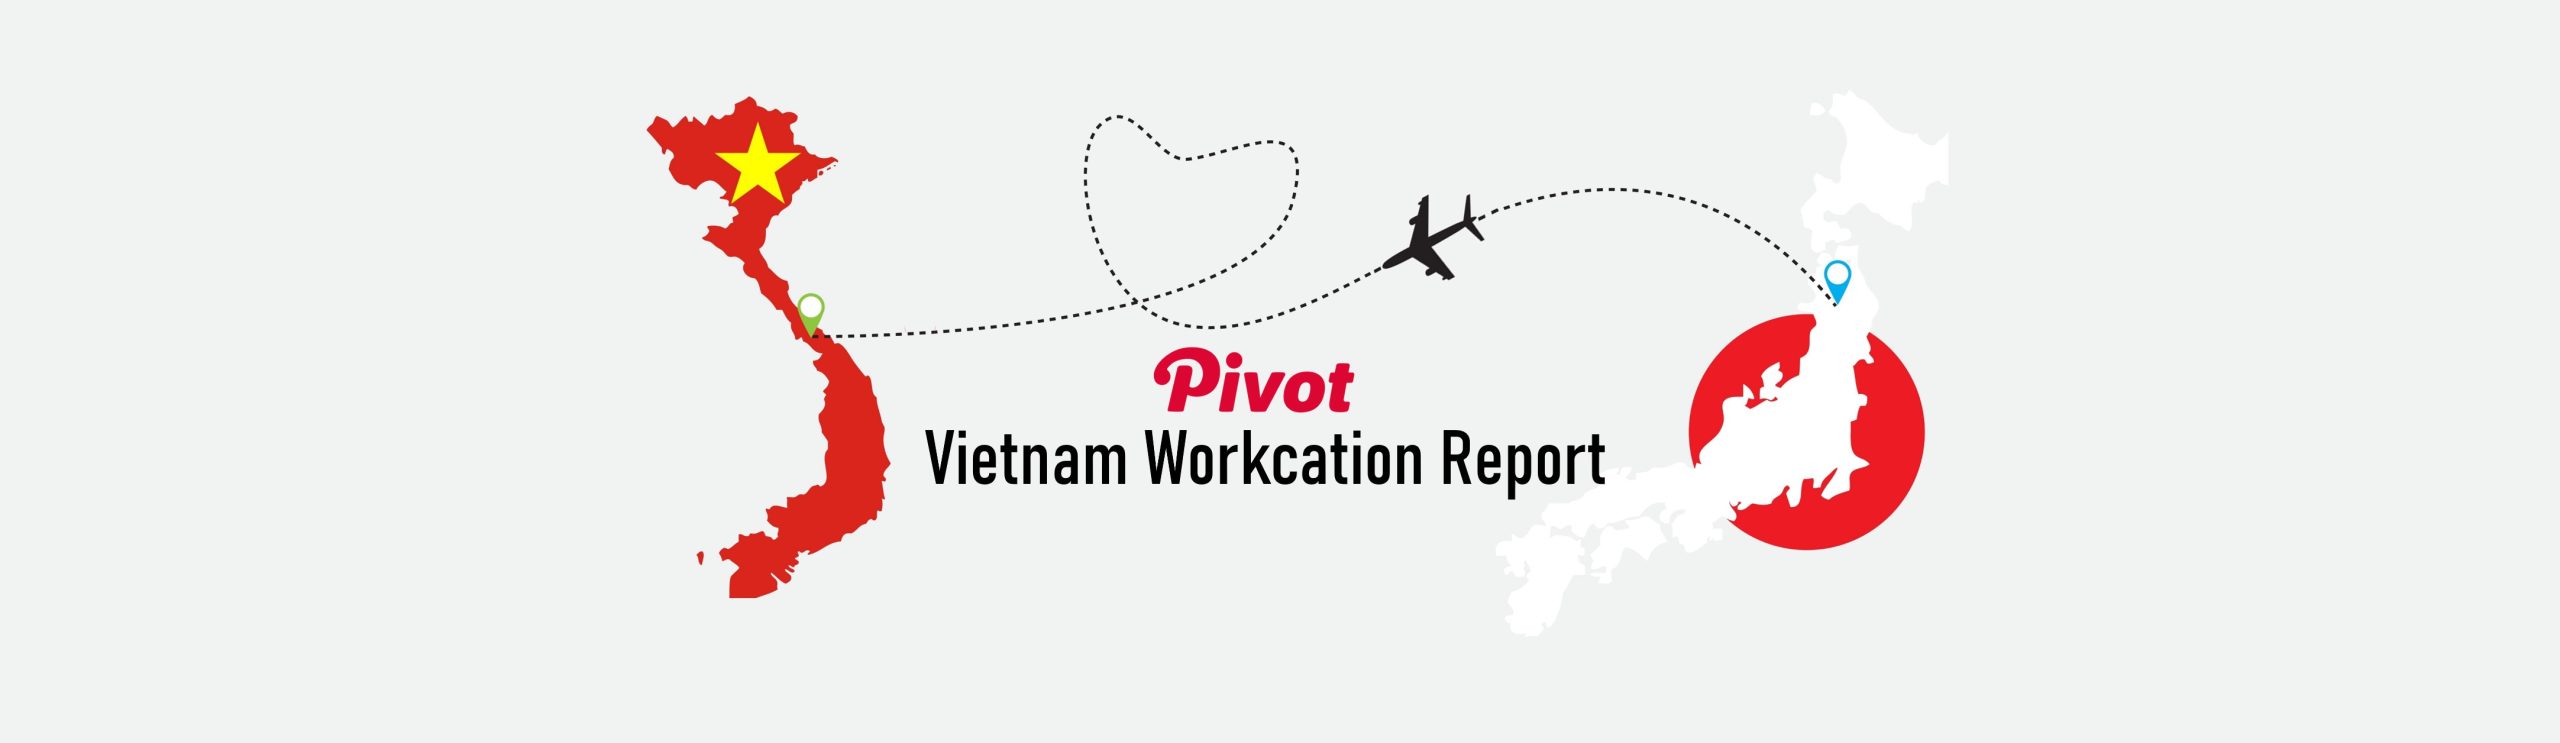 Vietnamworkcation